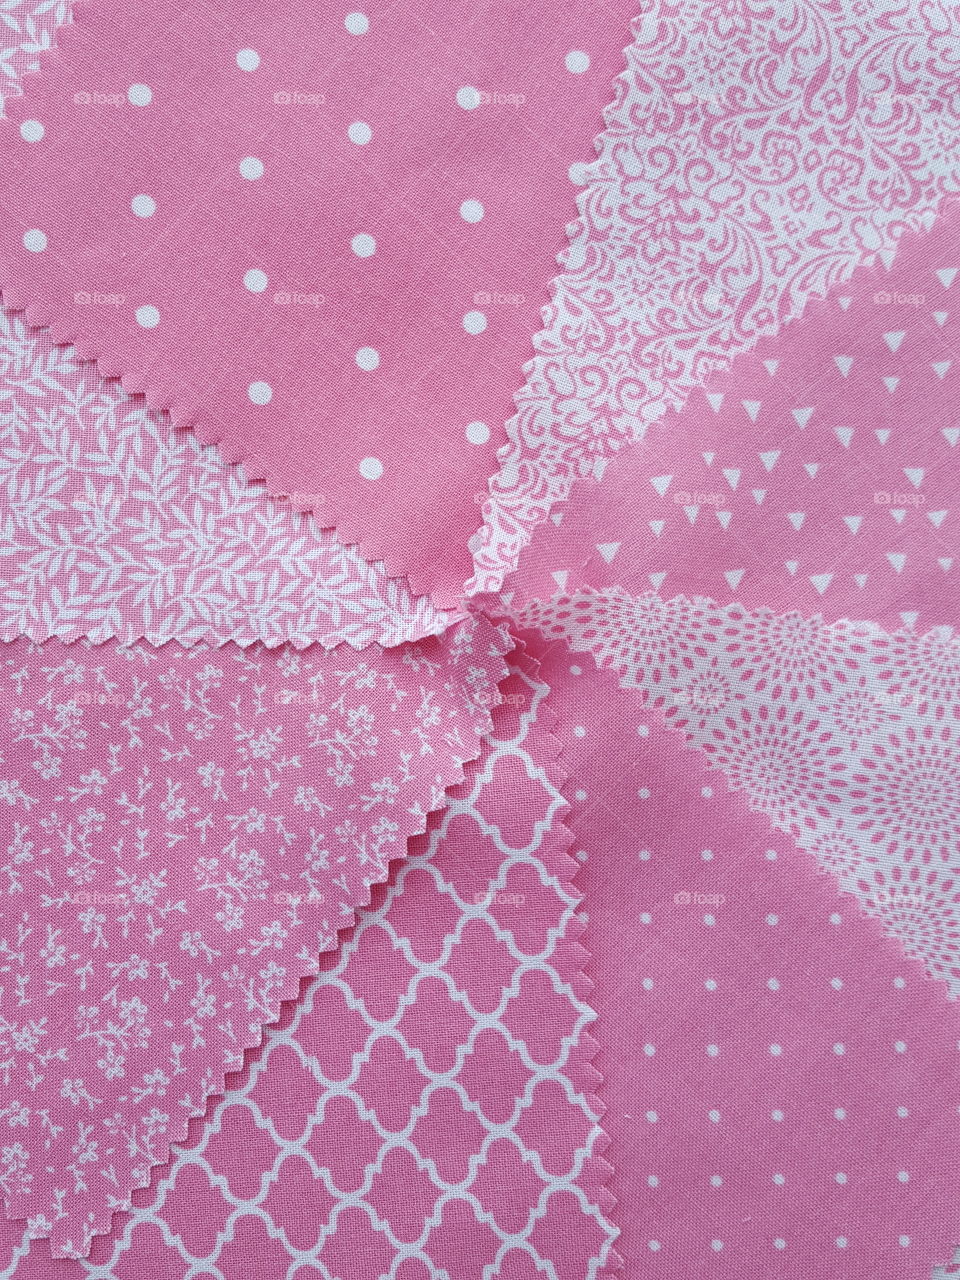 assorted pink fabrics